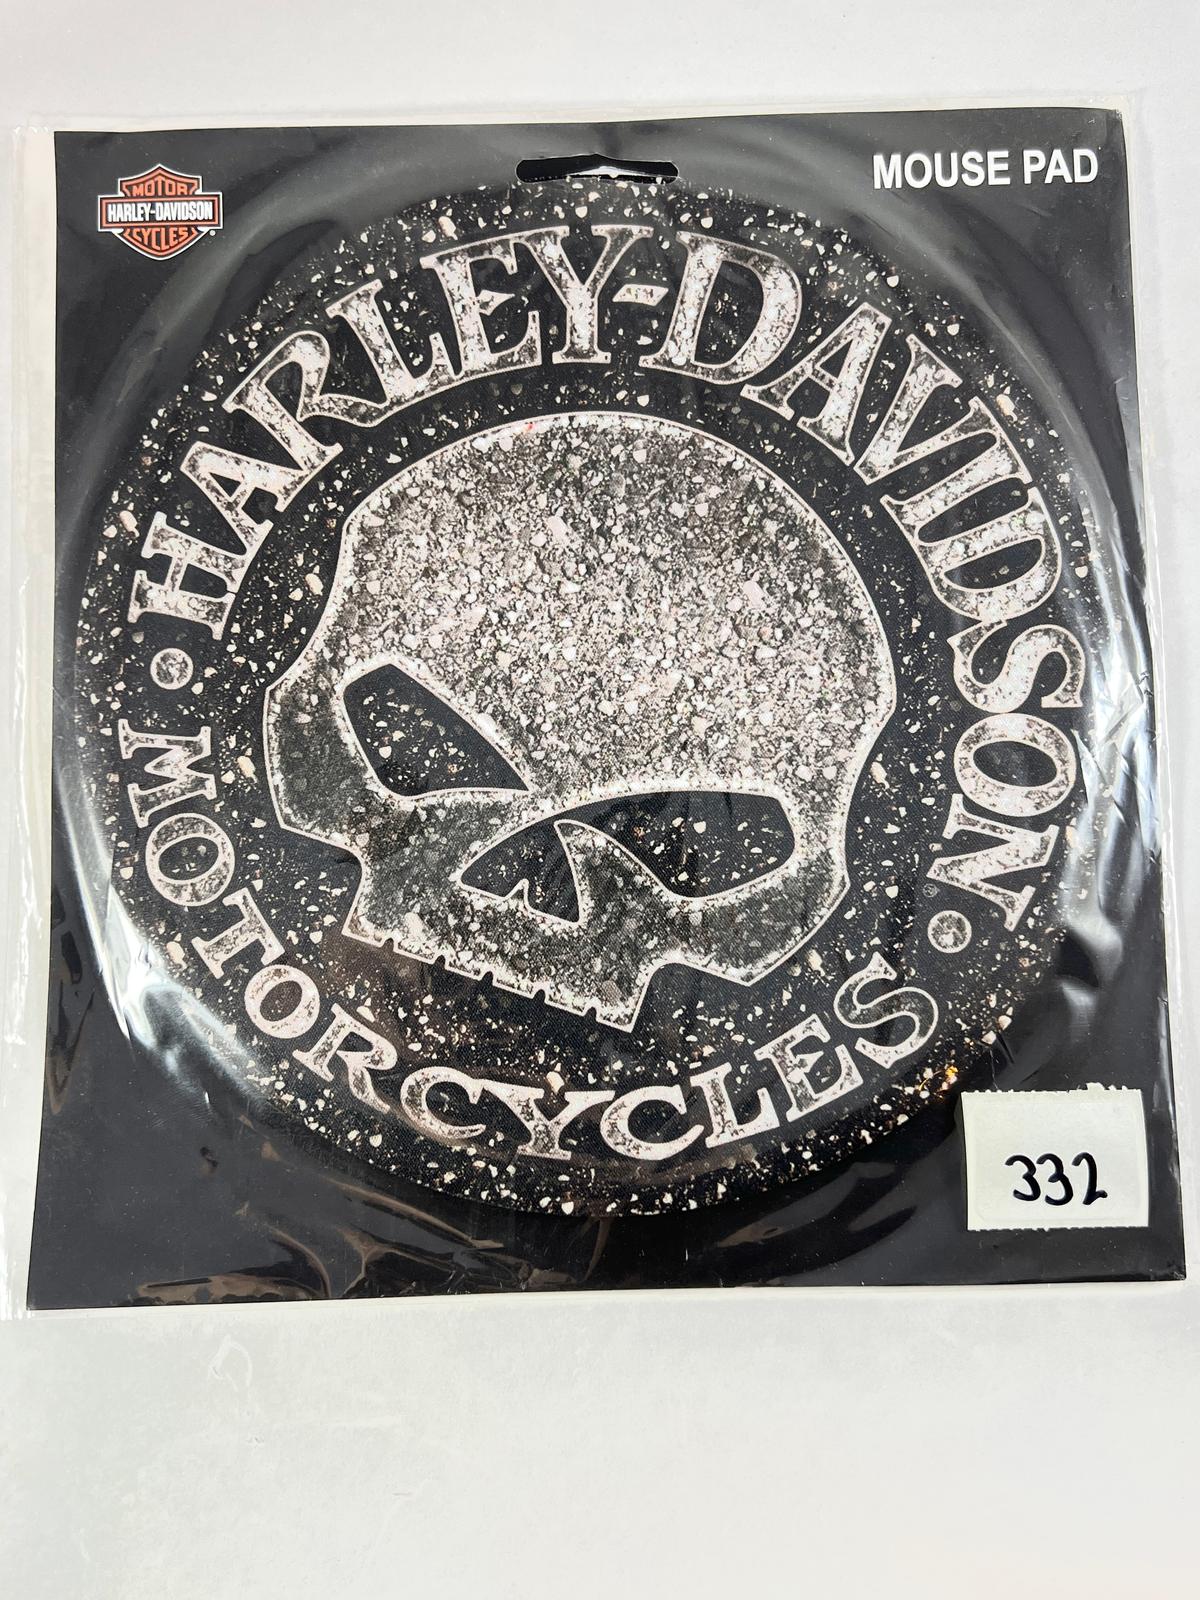 Harley Davidson Round Mouse Pad